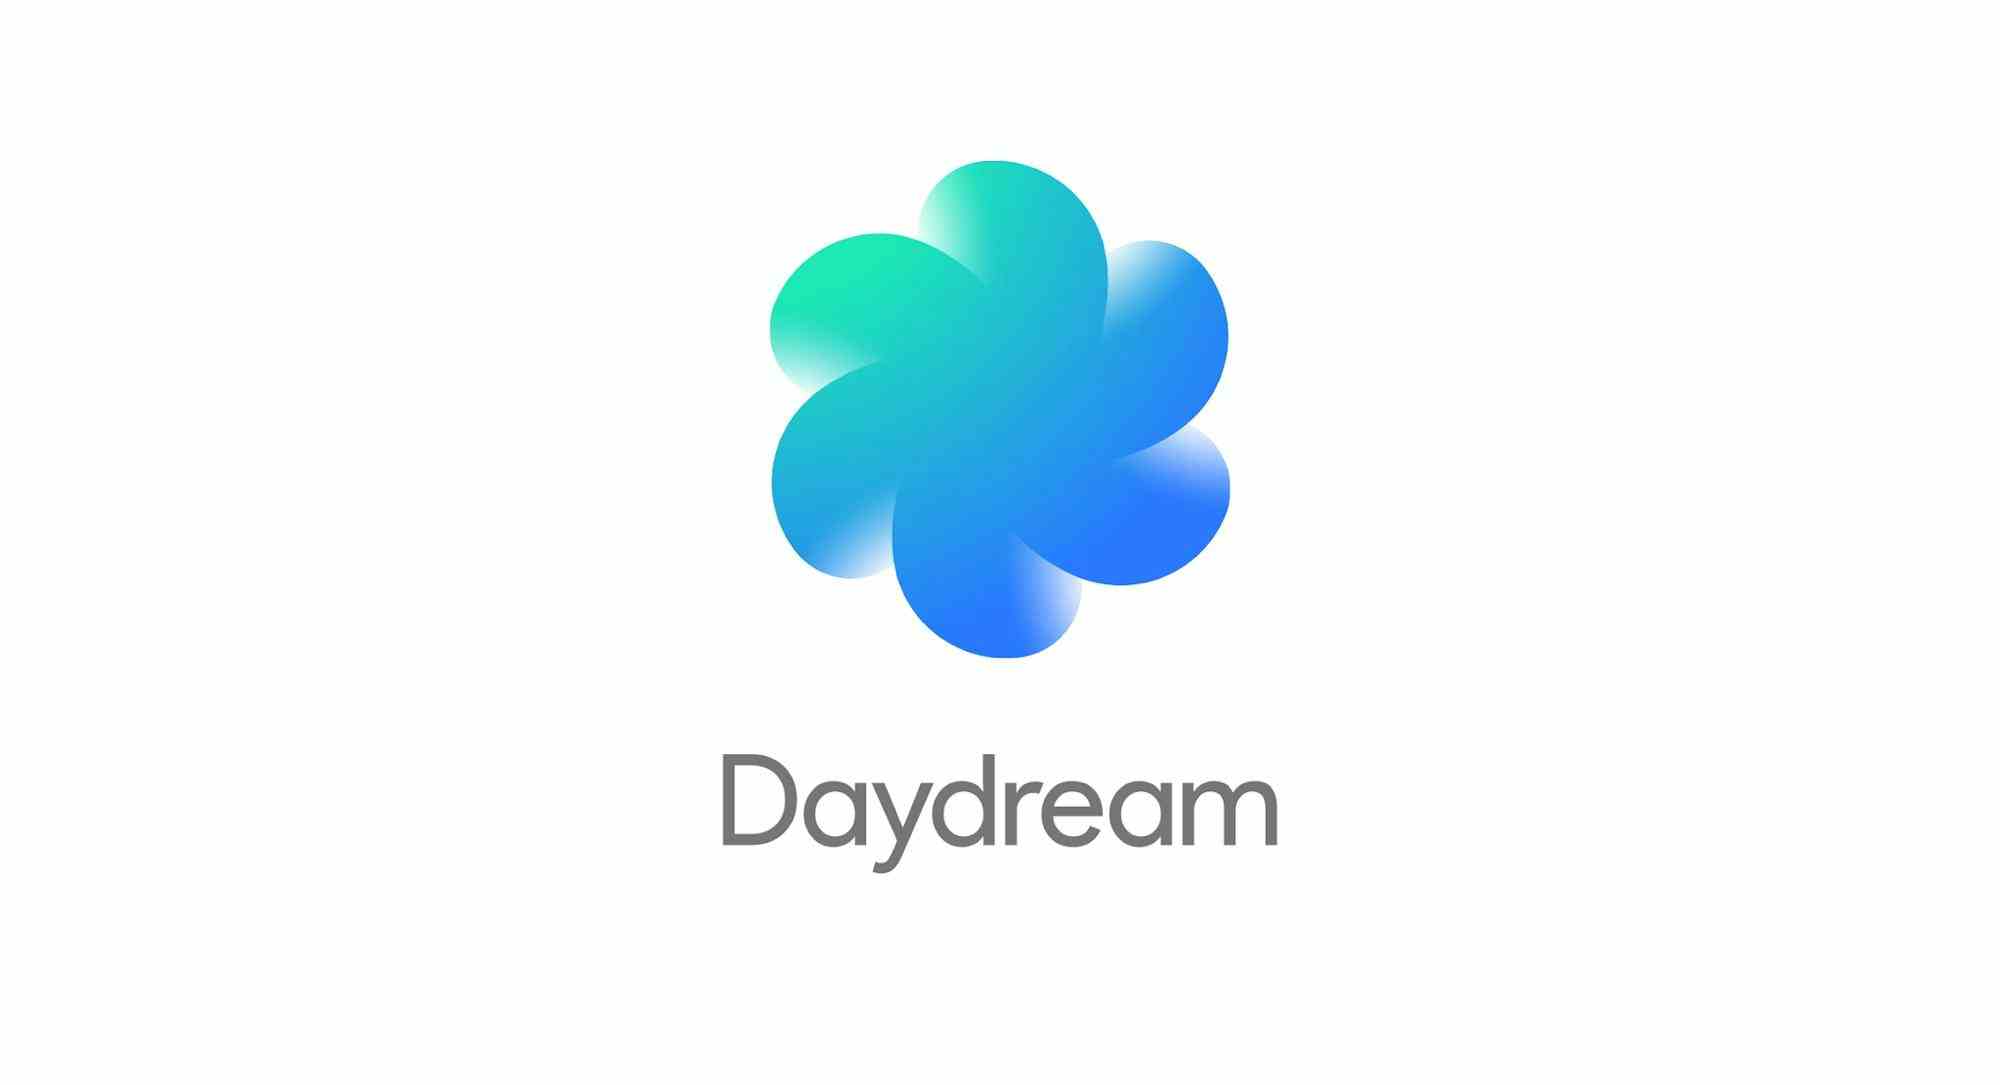 Google Daydream Image